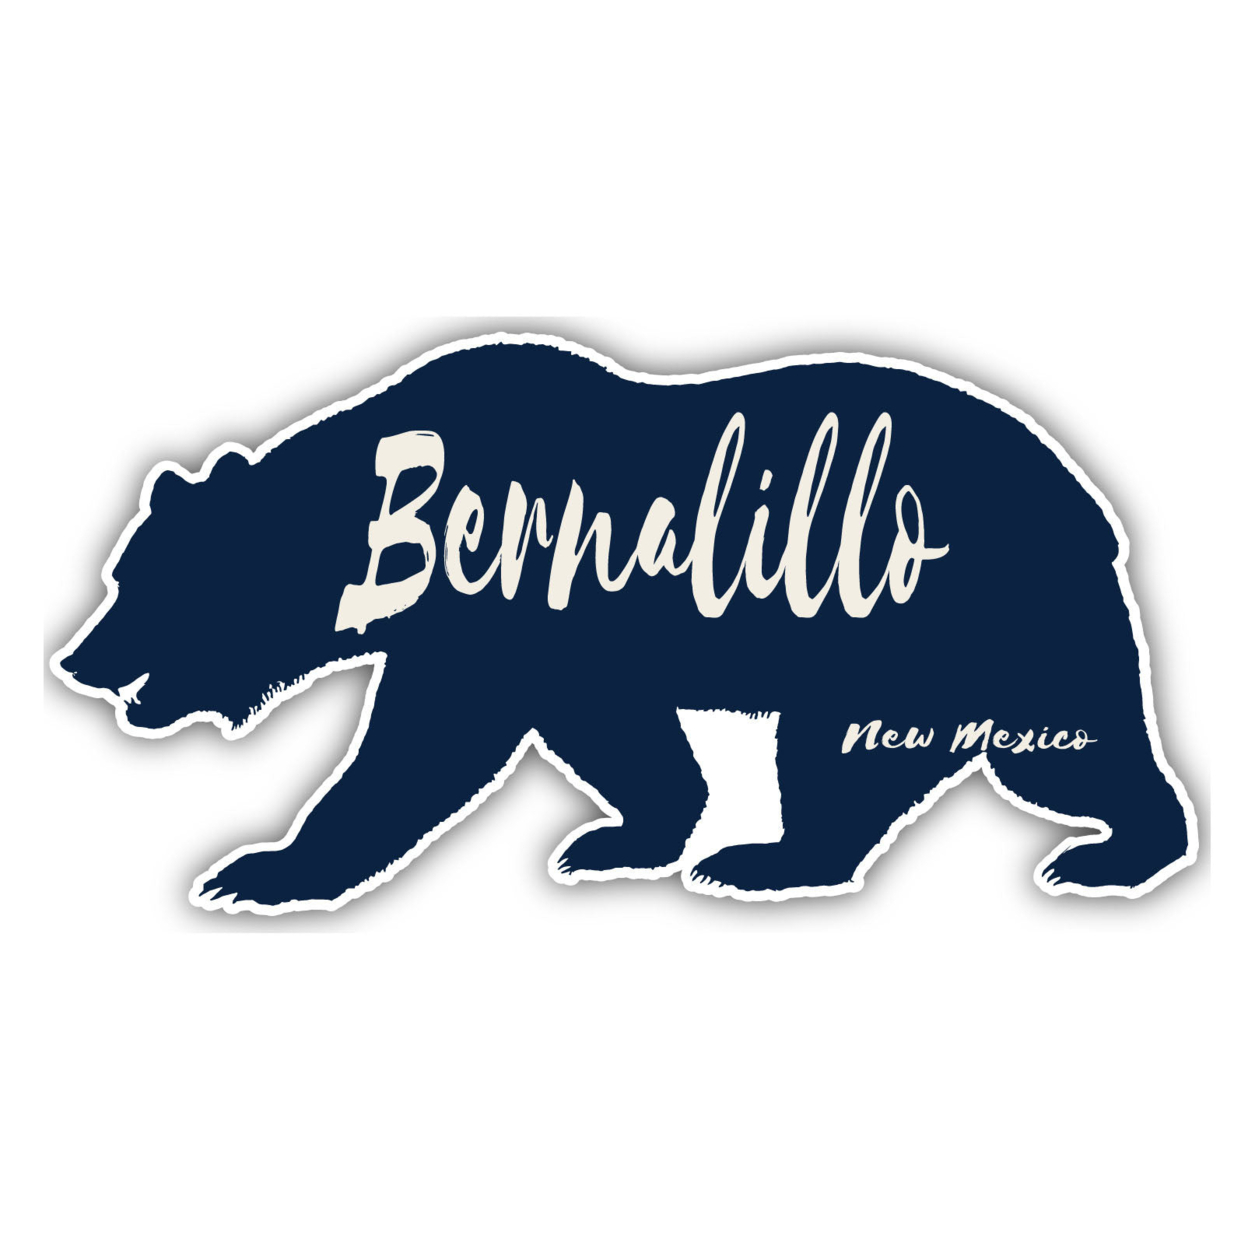 Bernalillo New Mexico Souvenir Decorative Stickers (Choose Theme And Size) - Single Unit, 6-Inch, Bear